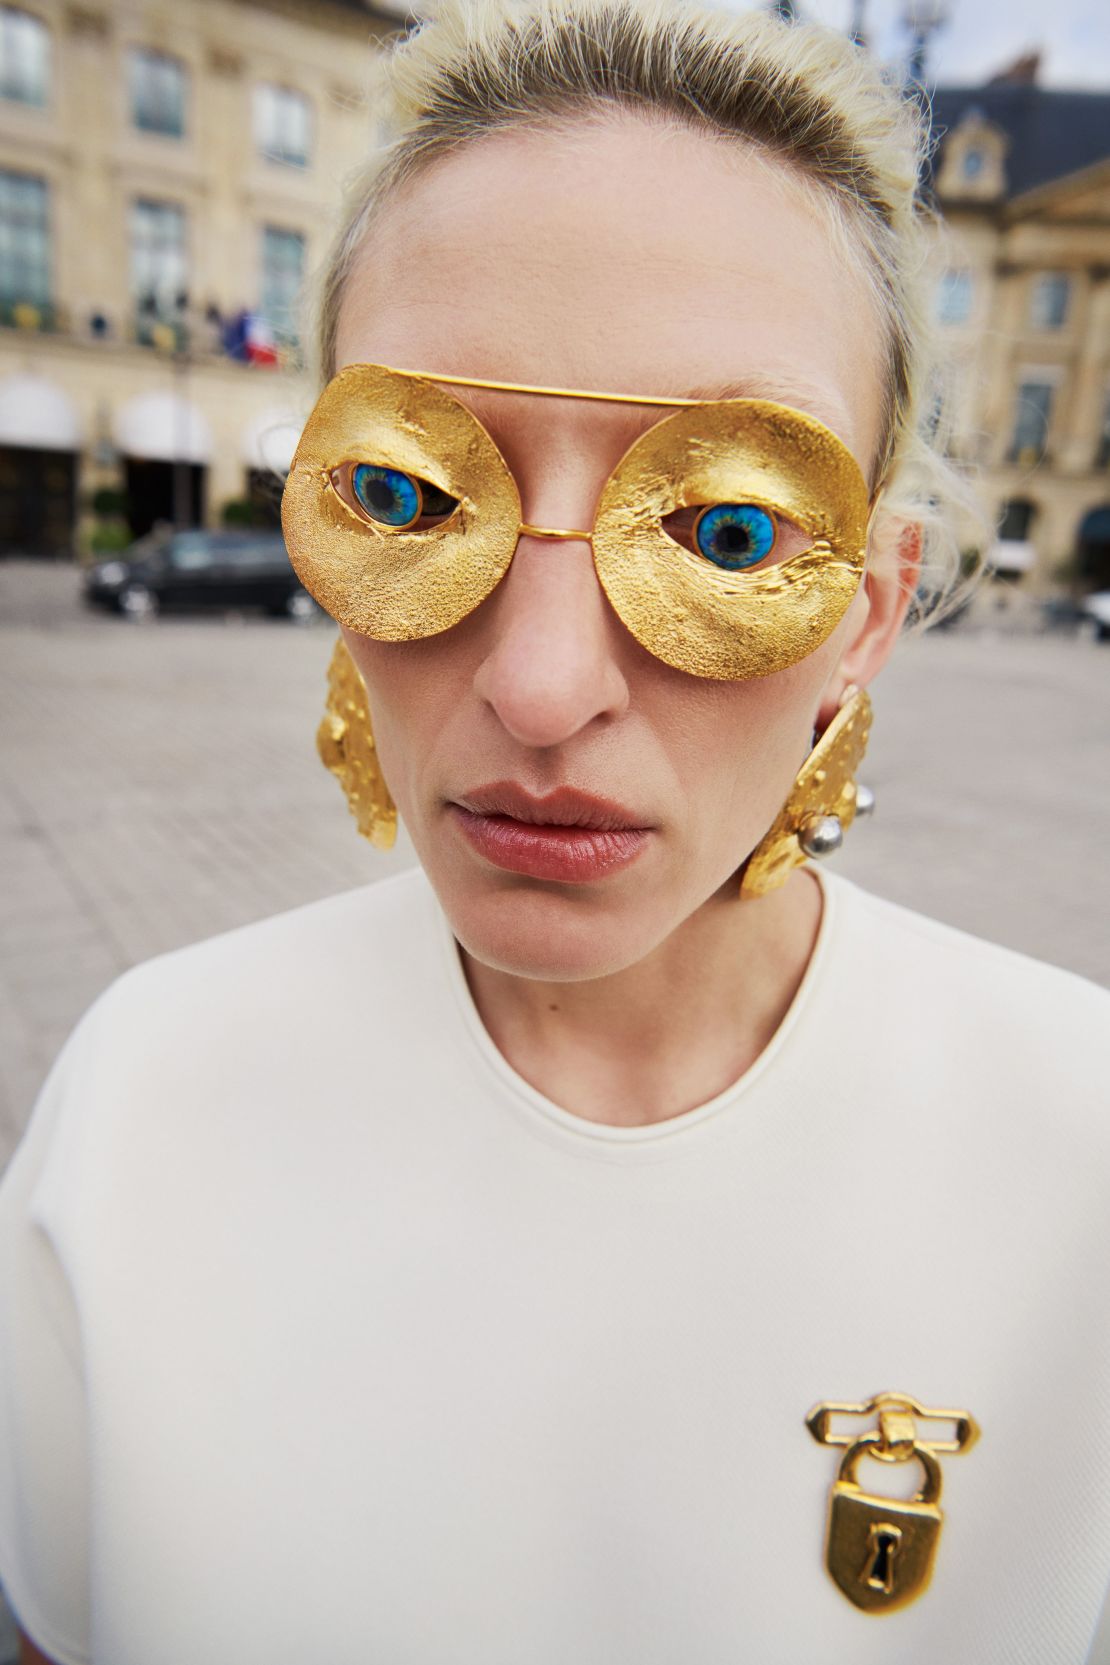 Paris Fashion Week 2021 dazzles visitors with glamor